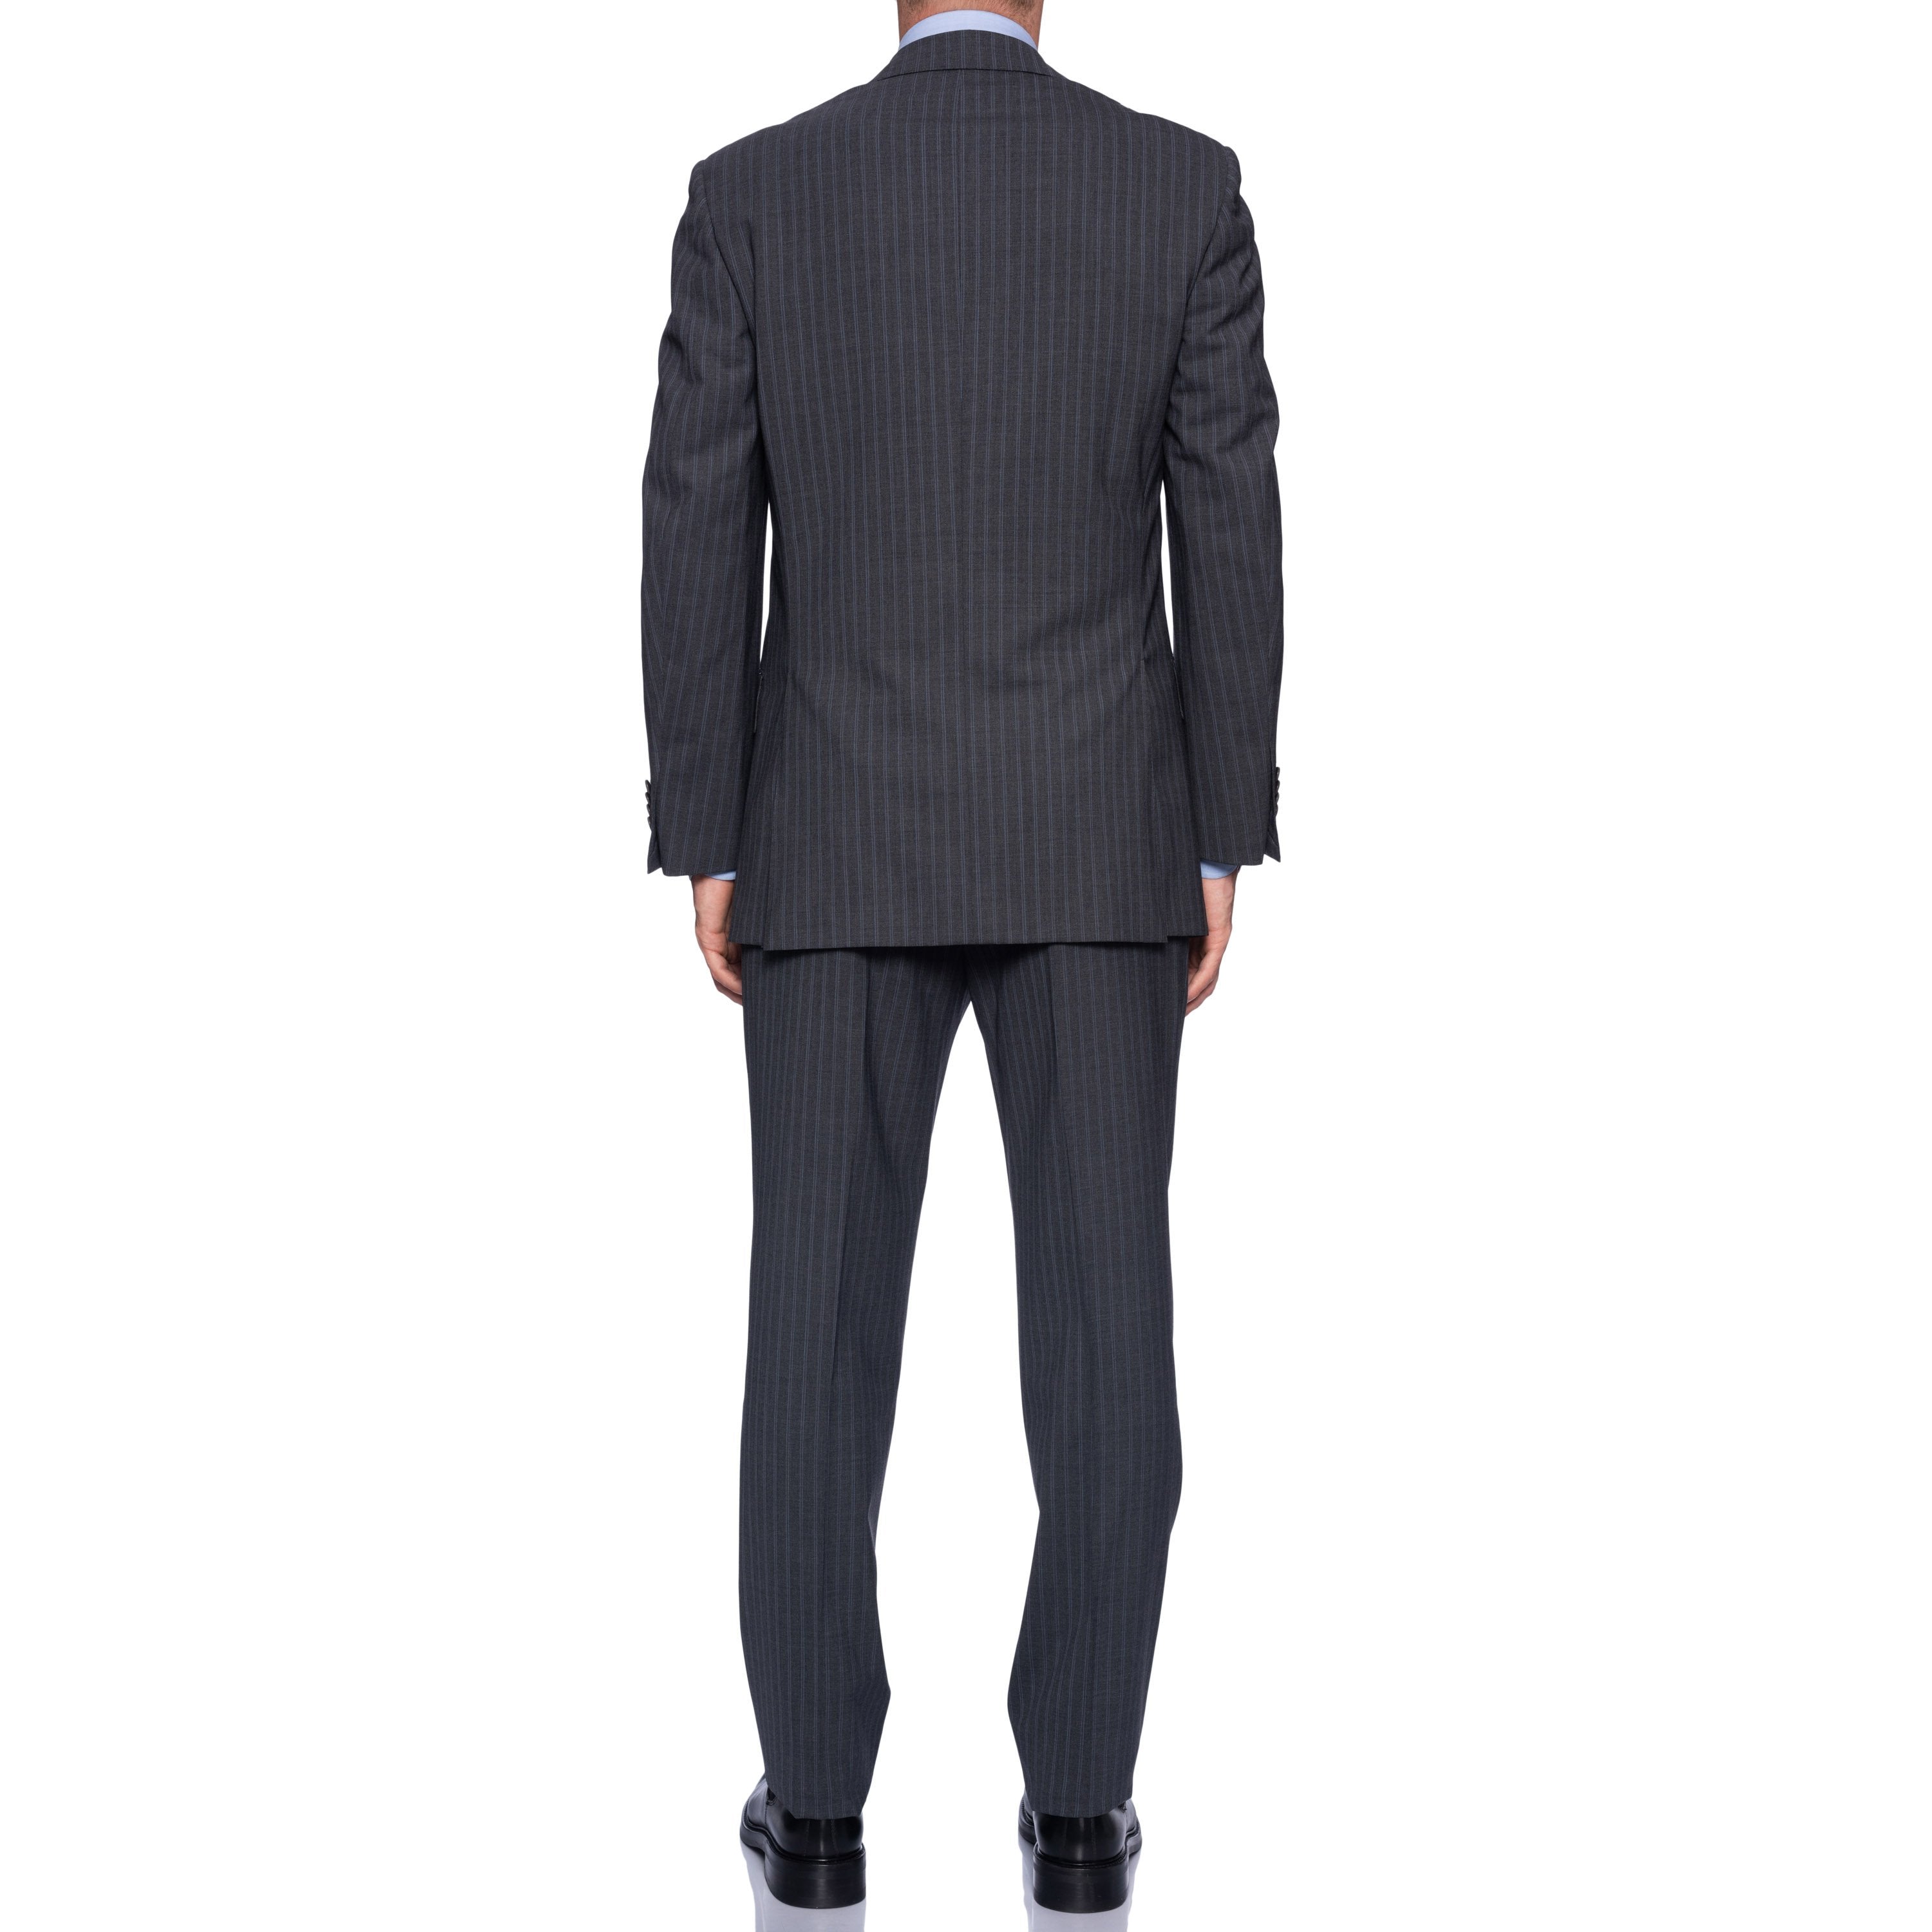 SARTORIA CASTANGIA Handmade Gray Striped Wool Super 110's Business Suit NEW CASTANGIA